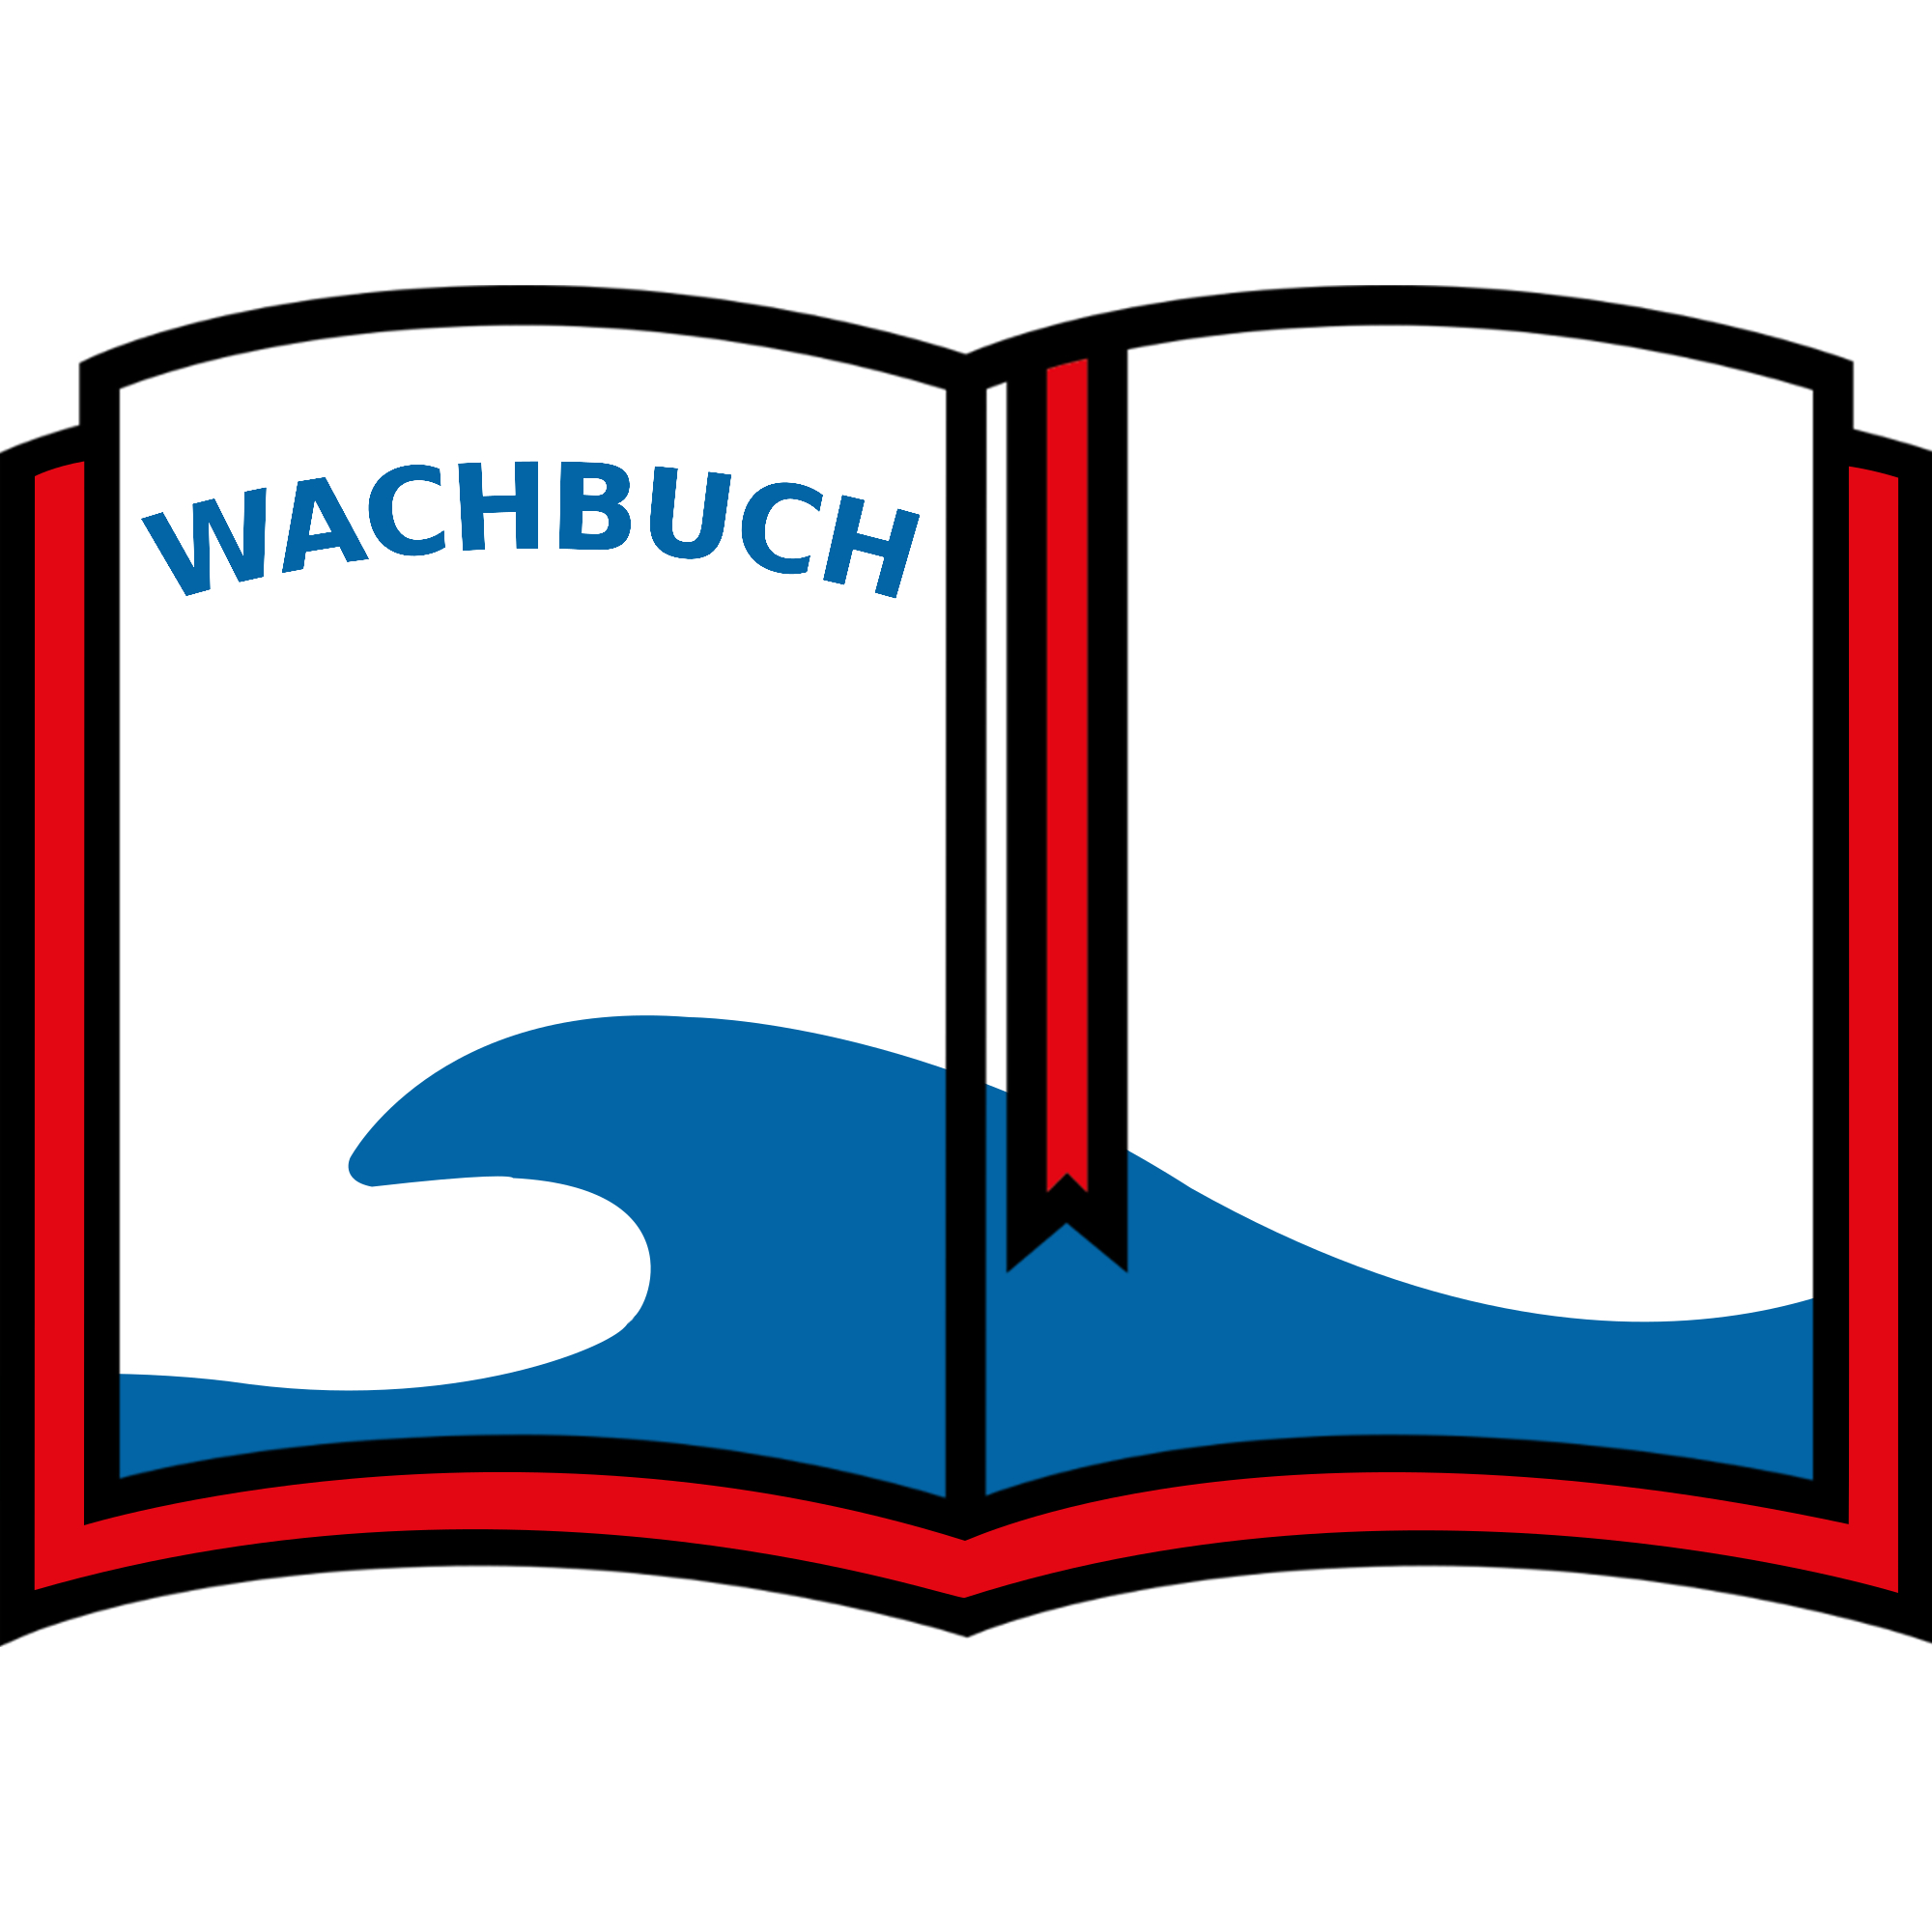 Wachbuch Logo